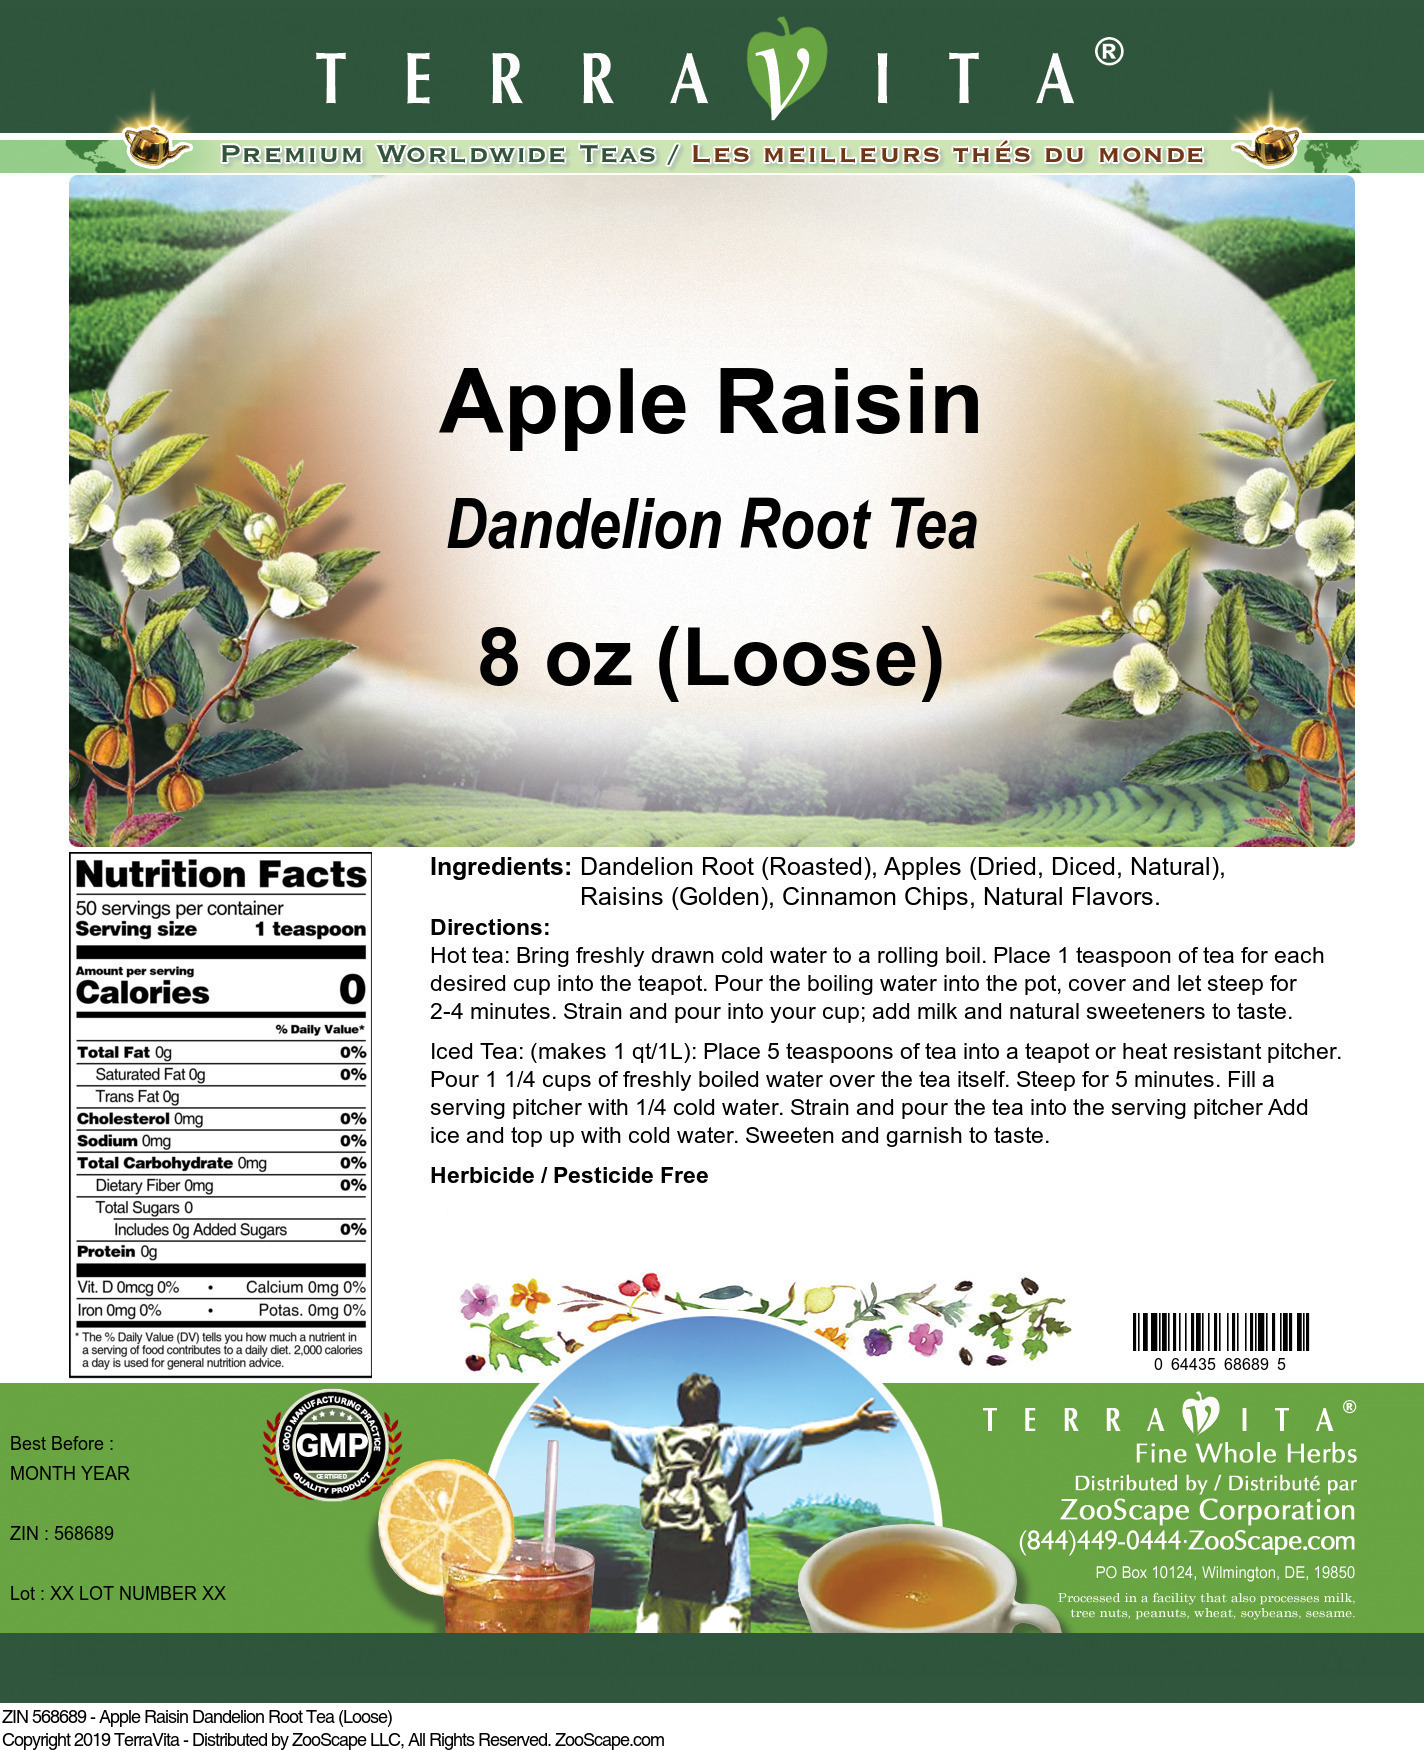 Apple Raisin Dandelion Root Tea (Loose) - Label